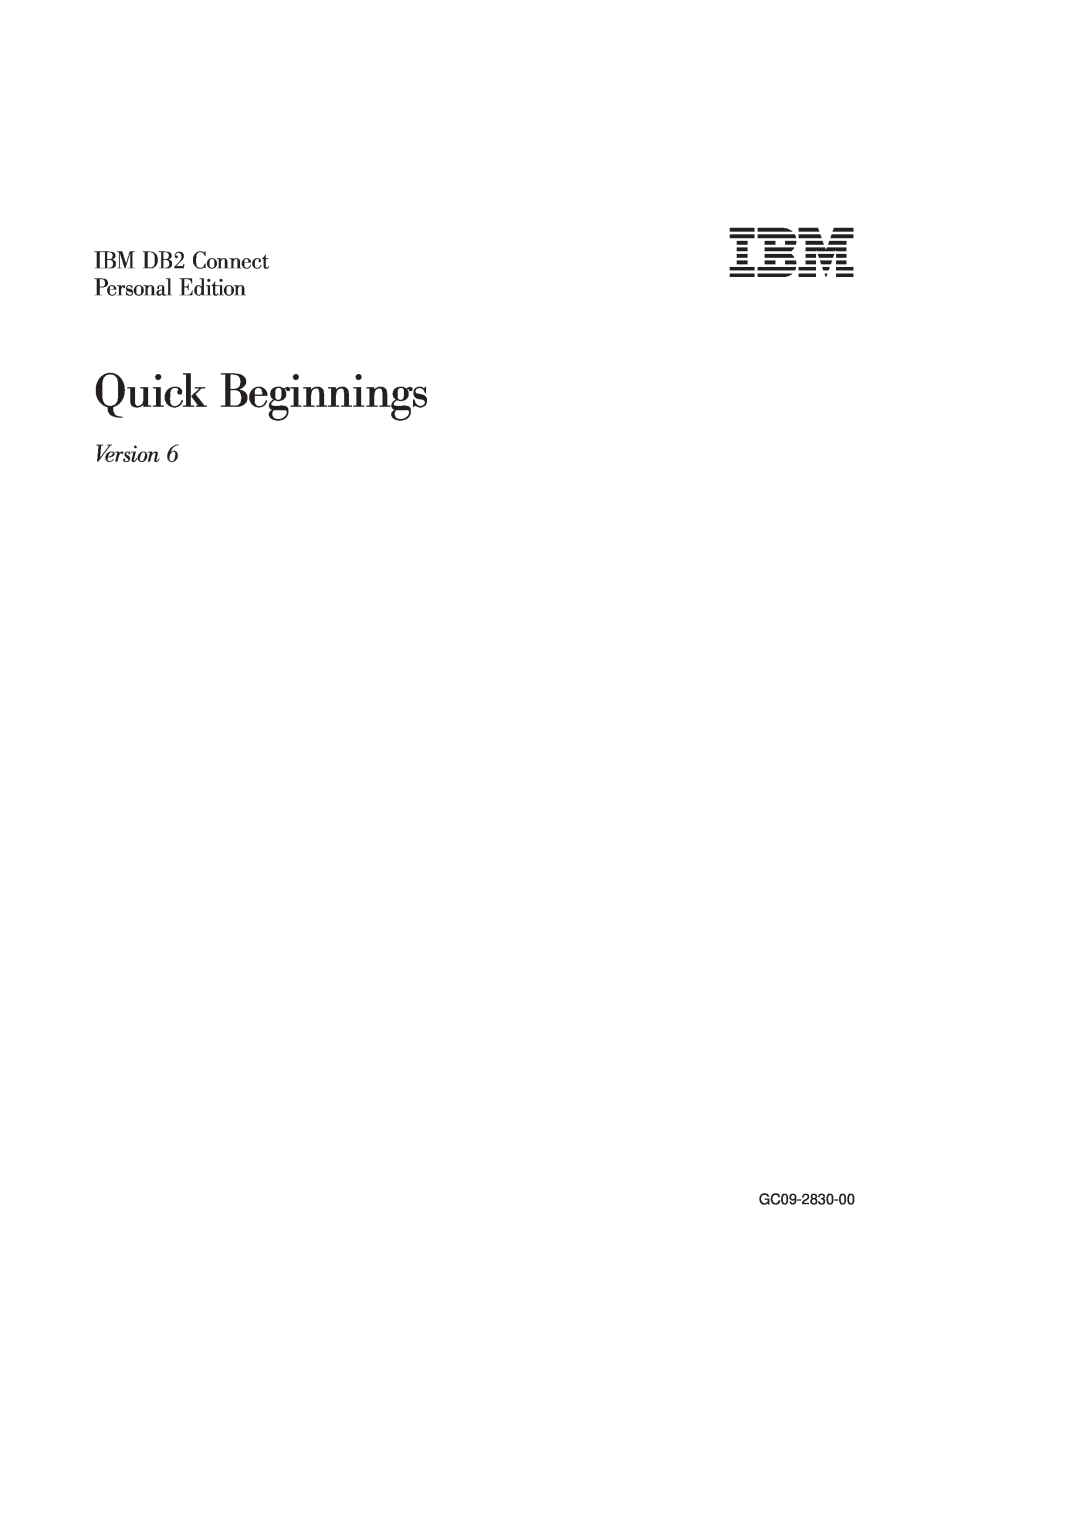 IBM GC09-2830-00 manual Quick Beginnings, IBM DB2 Connect, Personal Edition, Version 